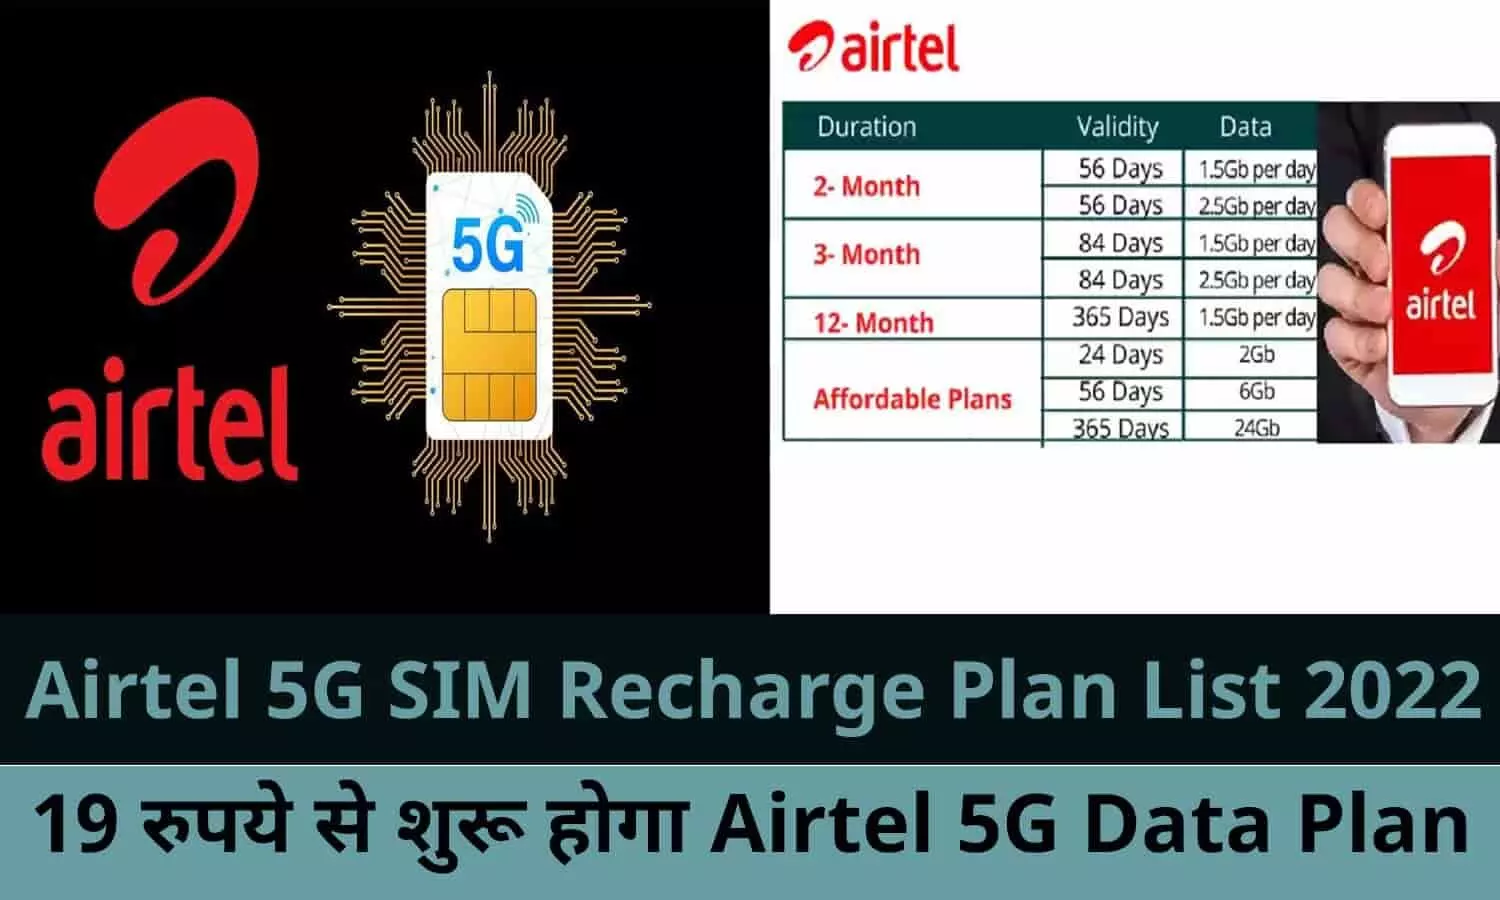 Airtel 5G SIM Recharge Plan